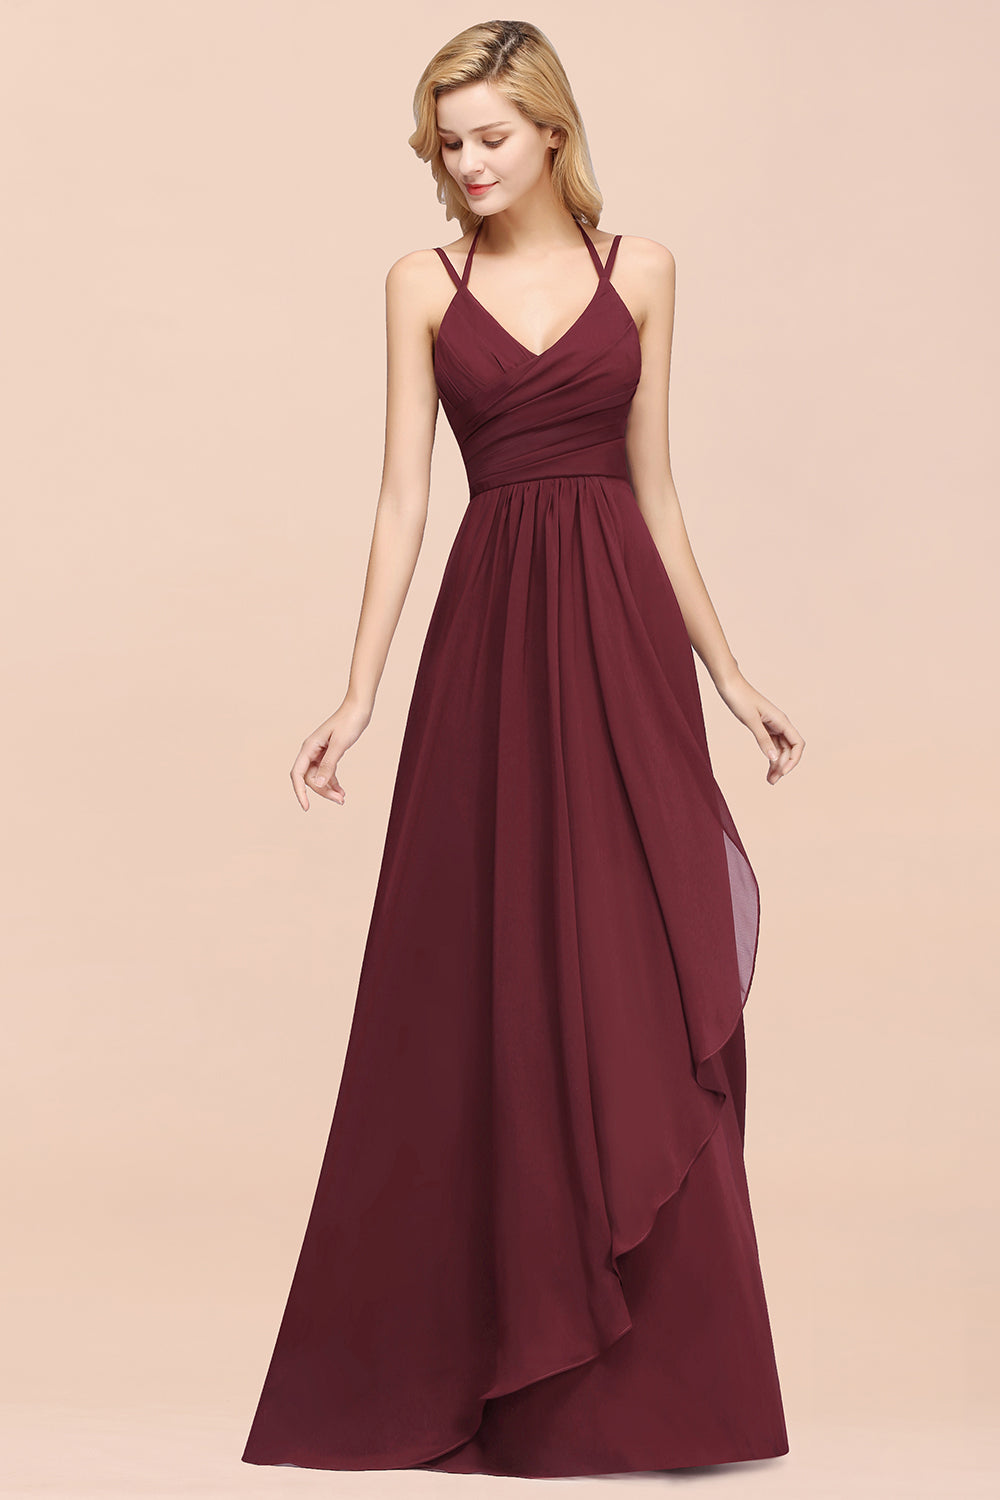 Affordable Chiffon Burgundy Bridesmaid Dress With Spaghetti Straps-27dress